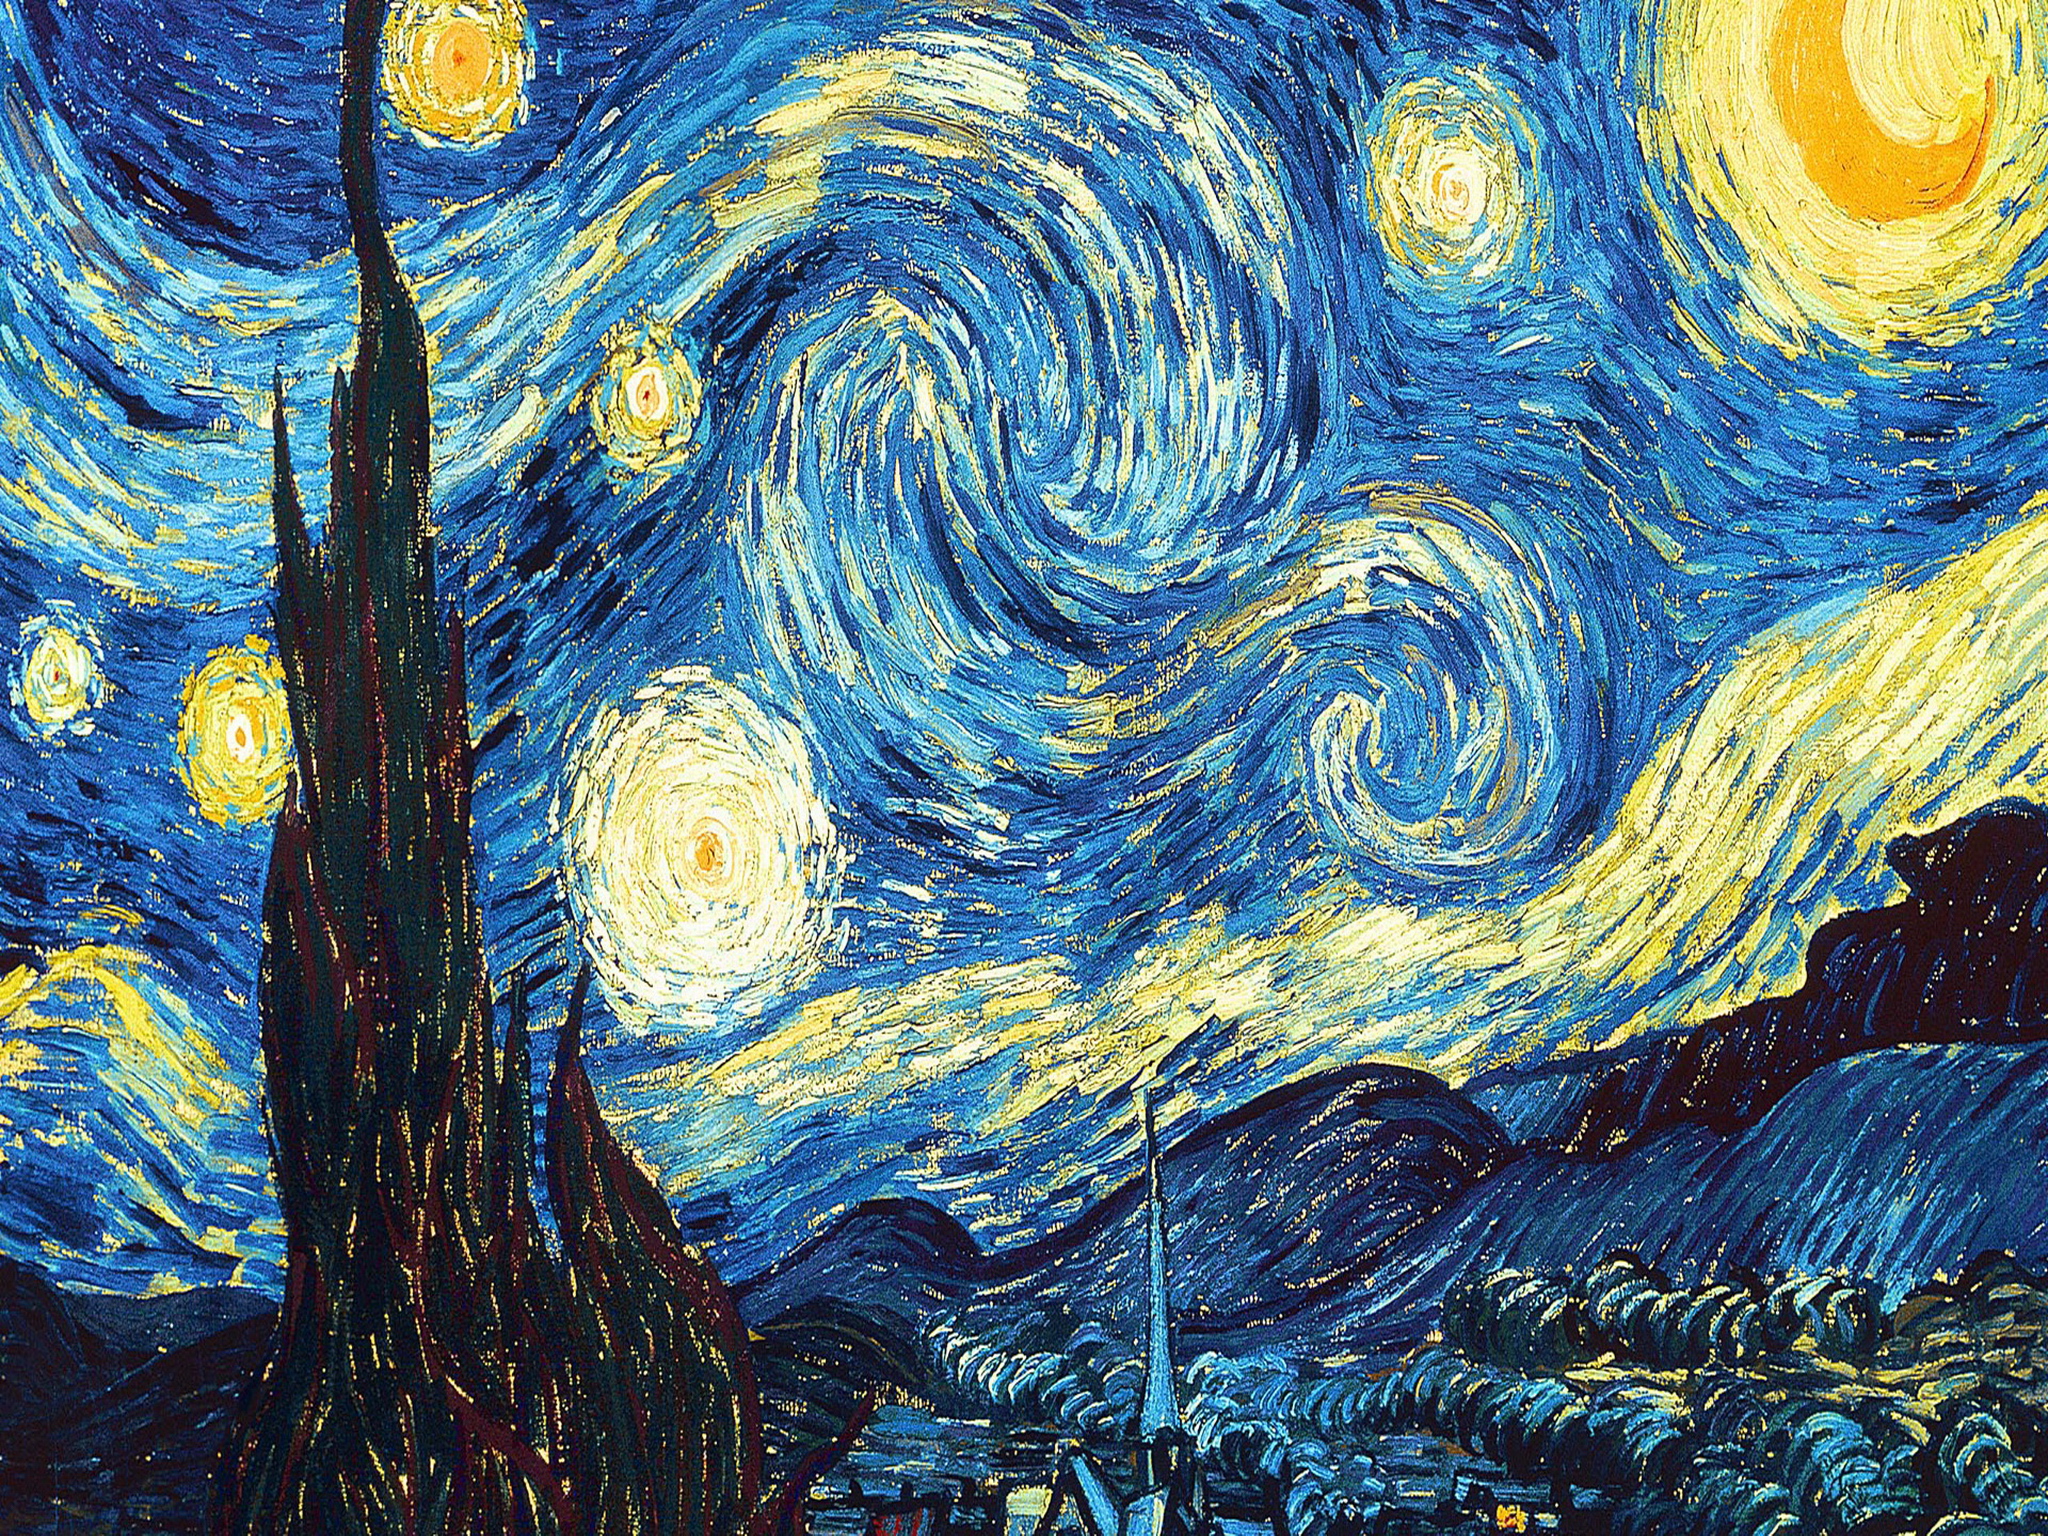 [36+] Starry Night Ipad Wallpaper | Wallpapersafari.com